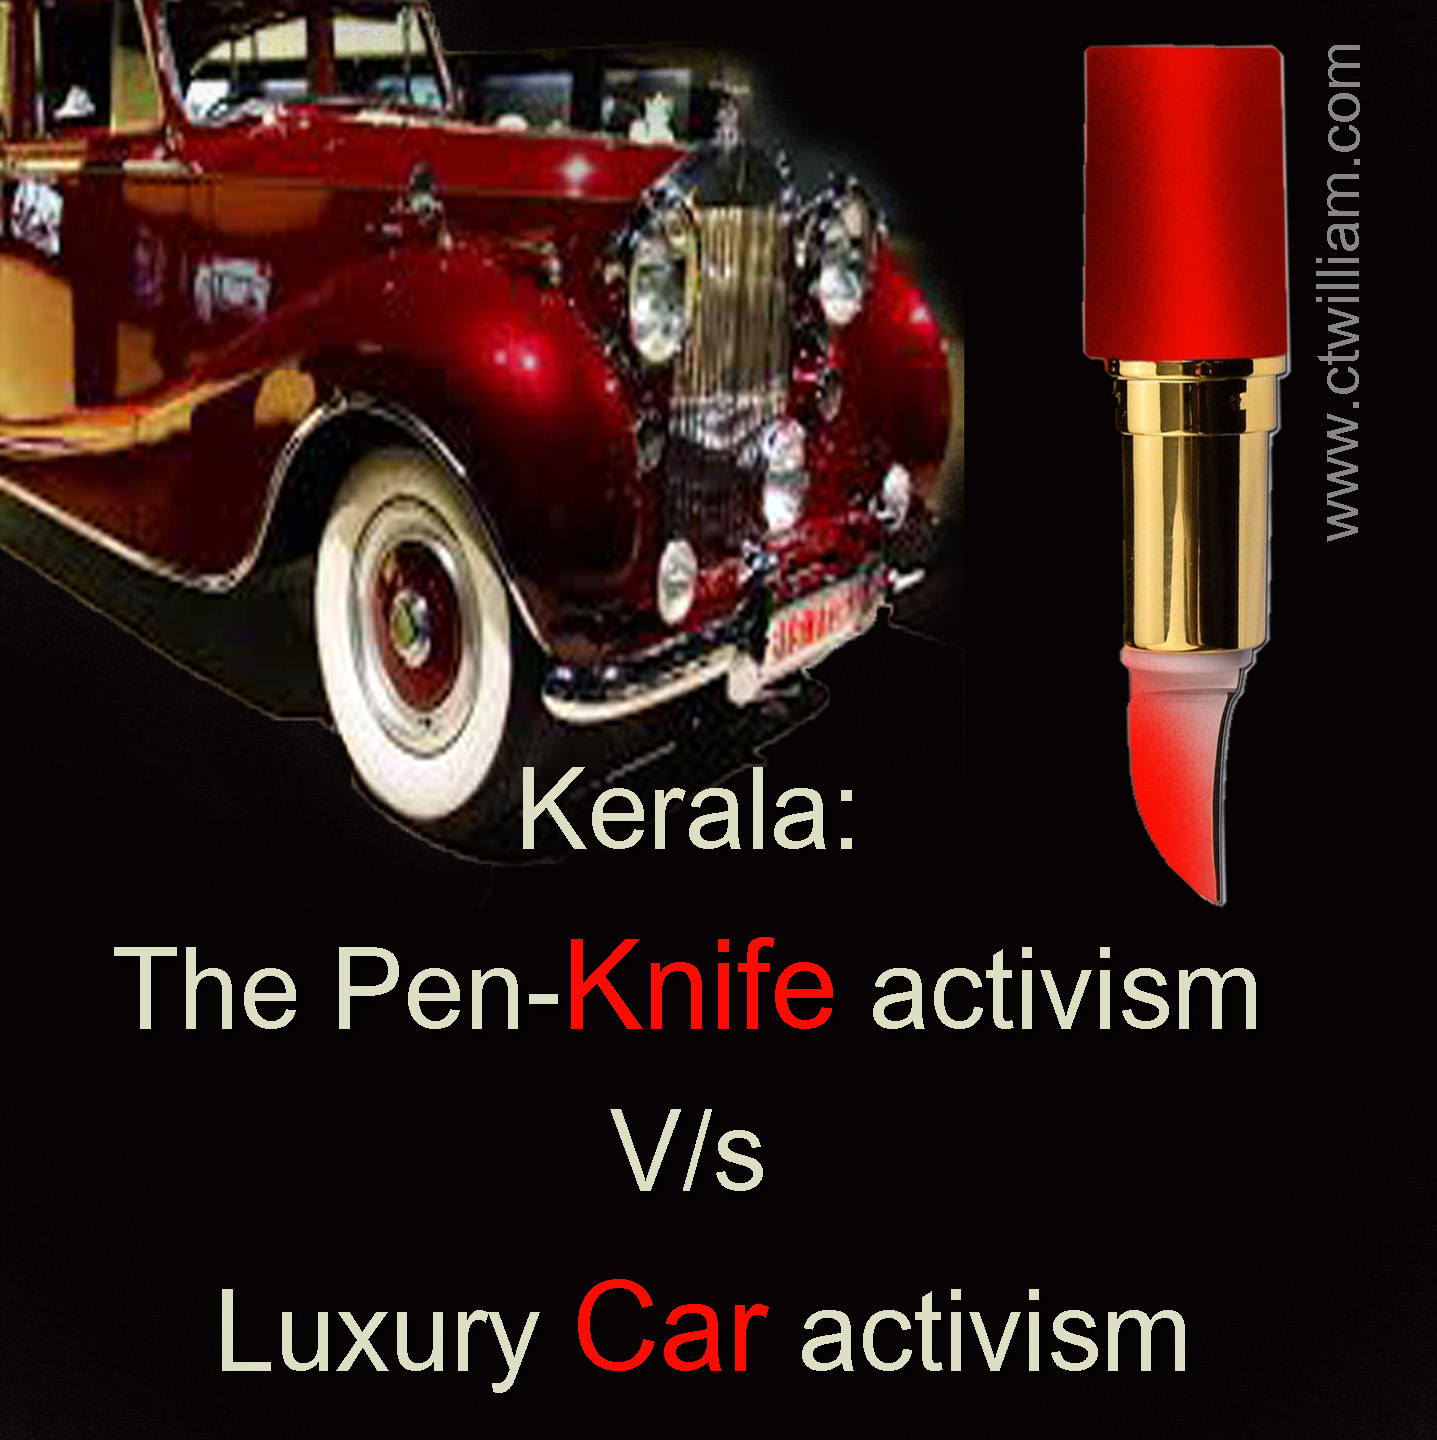 Kerala: The Pen-Knife activism V/s Luxury Car activism